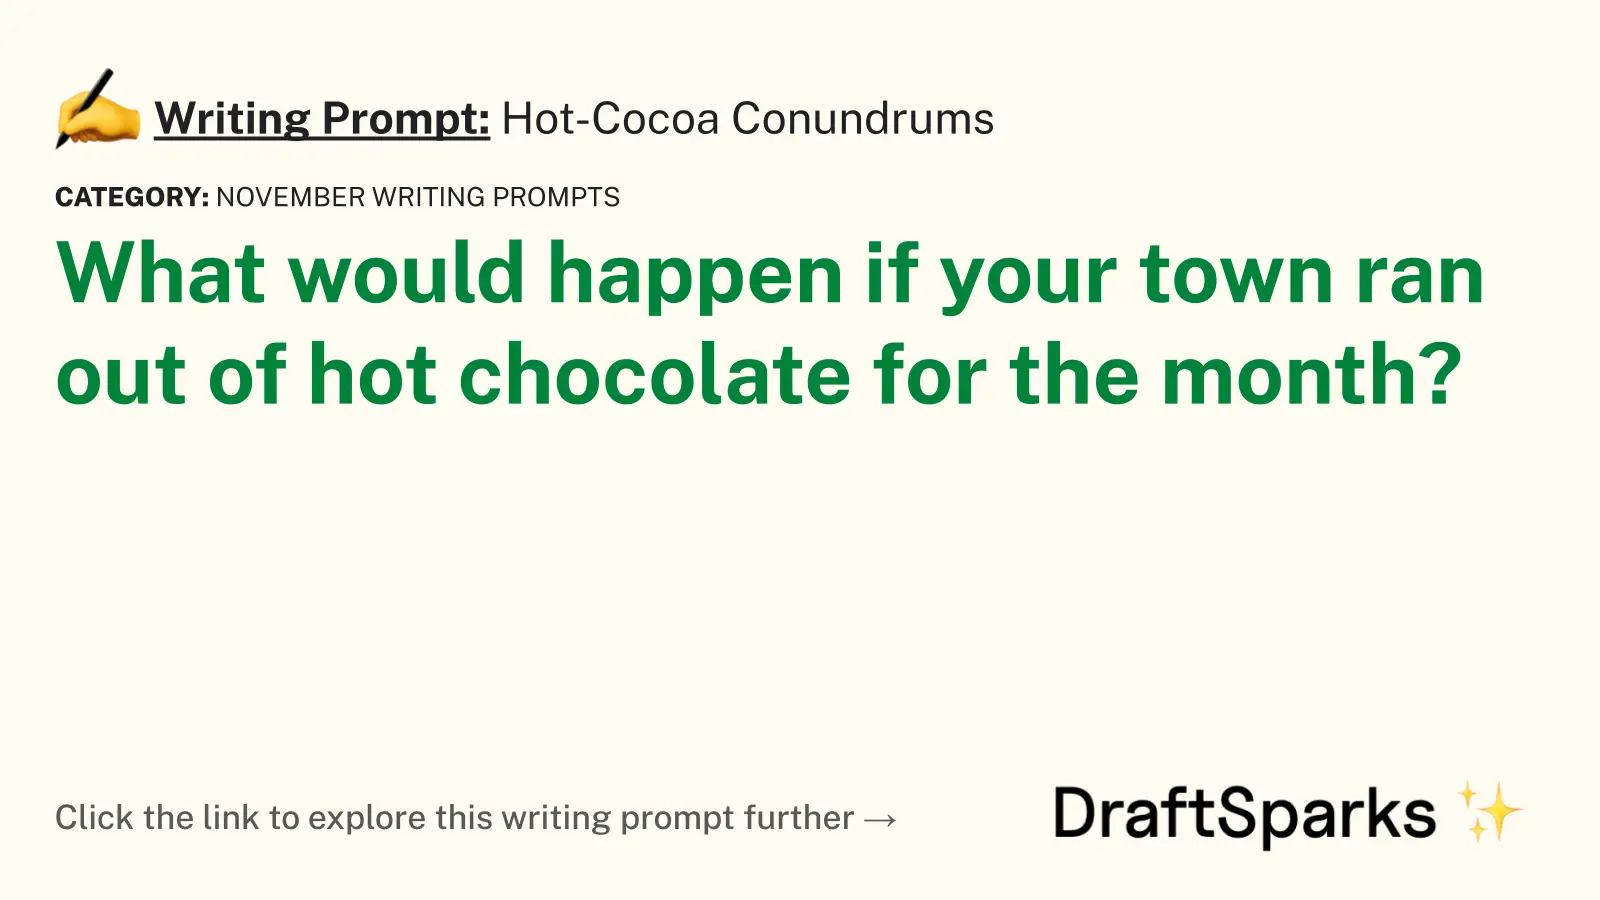 Hot-Cocoa Conundrums